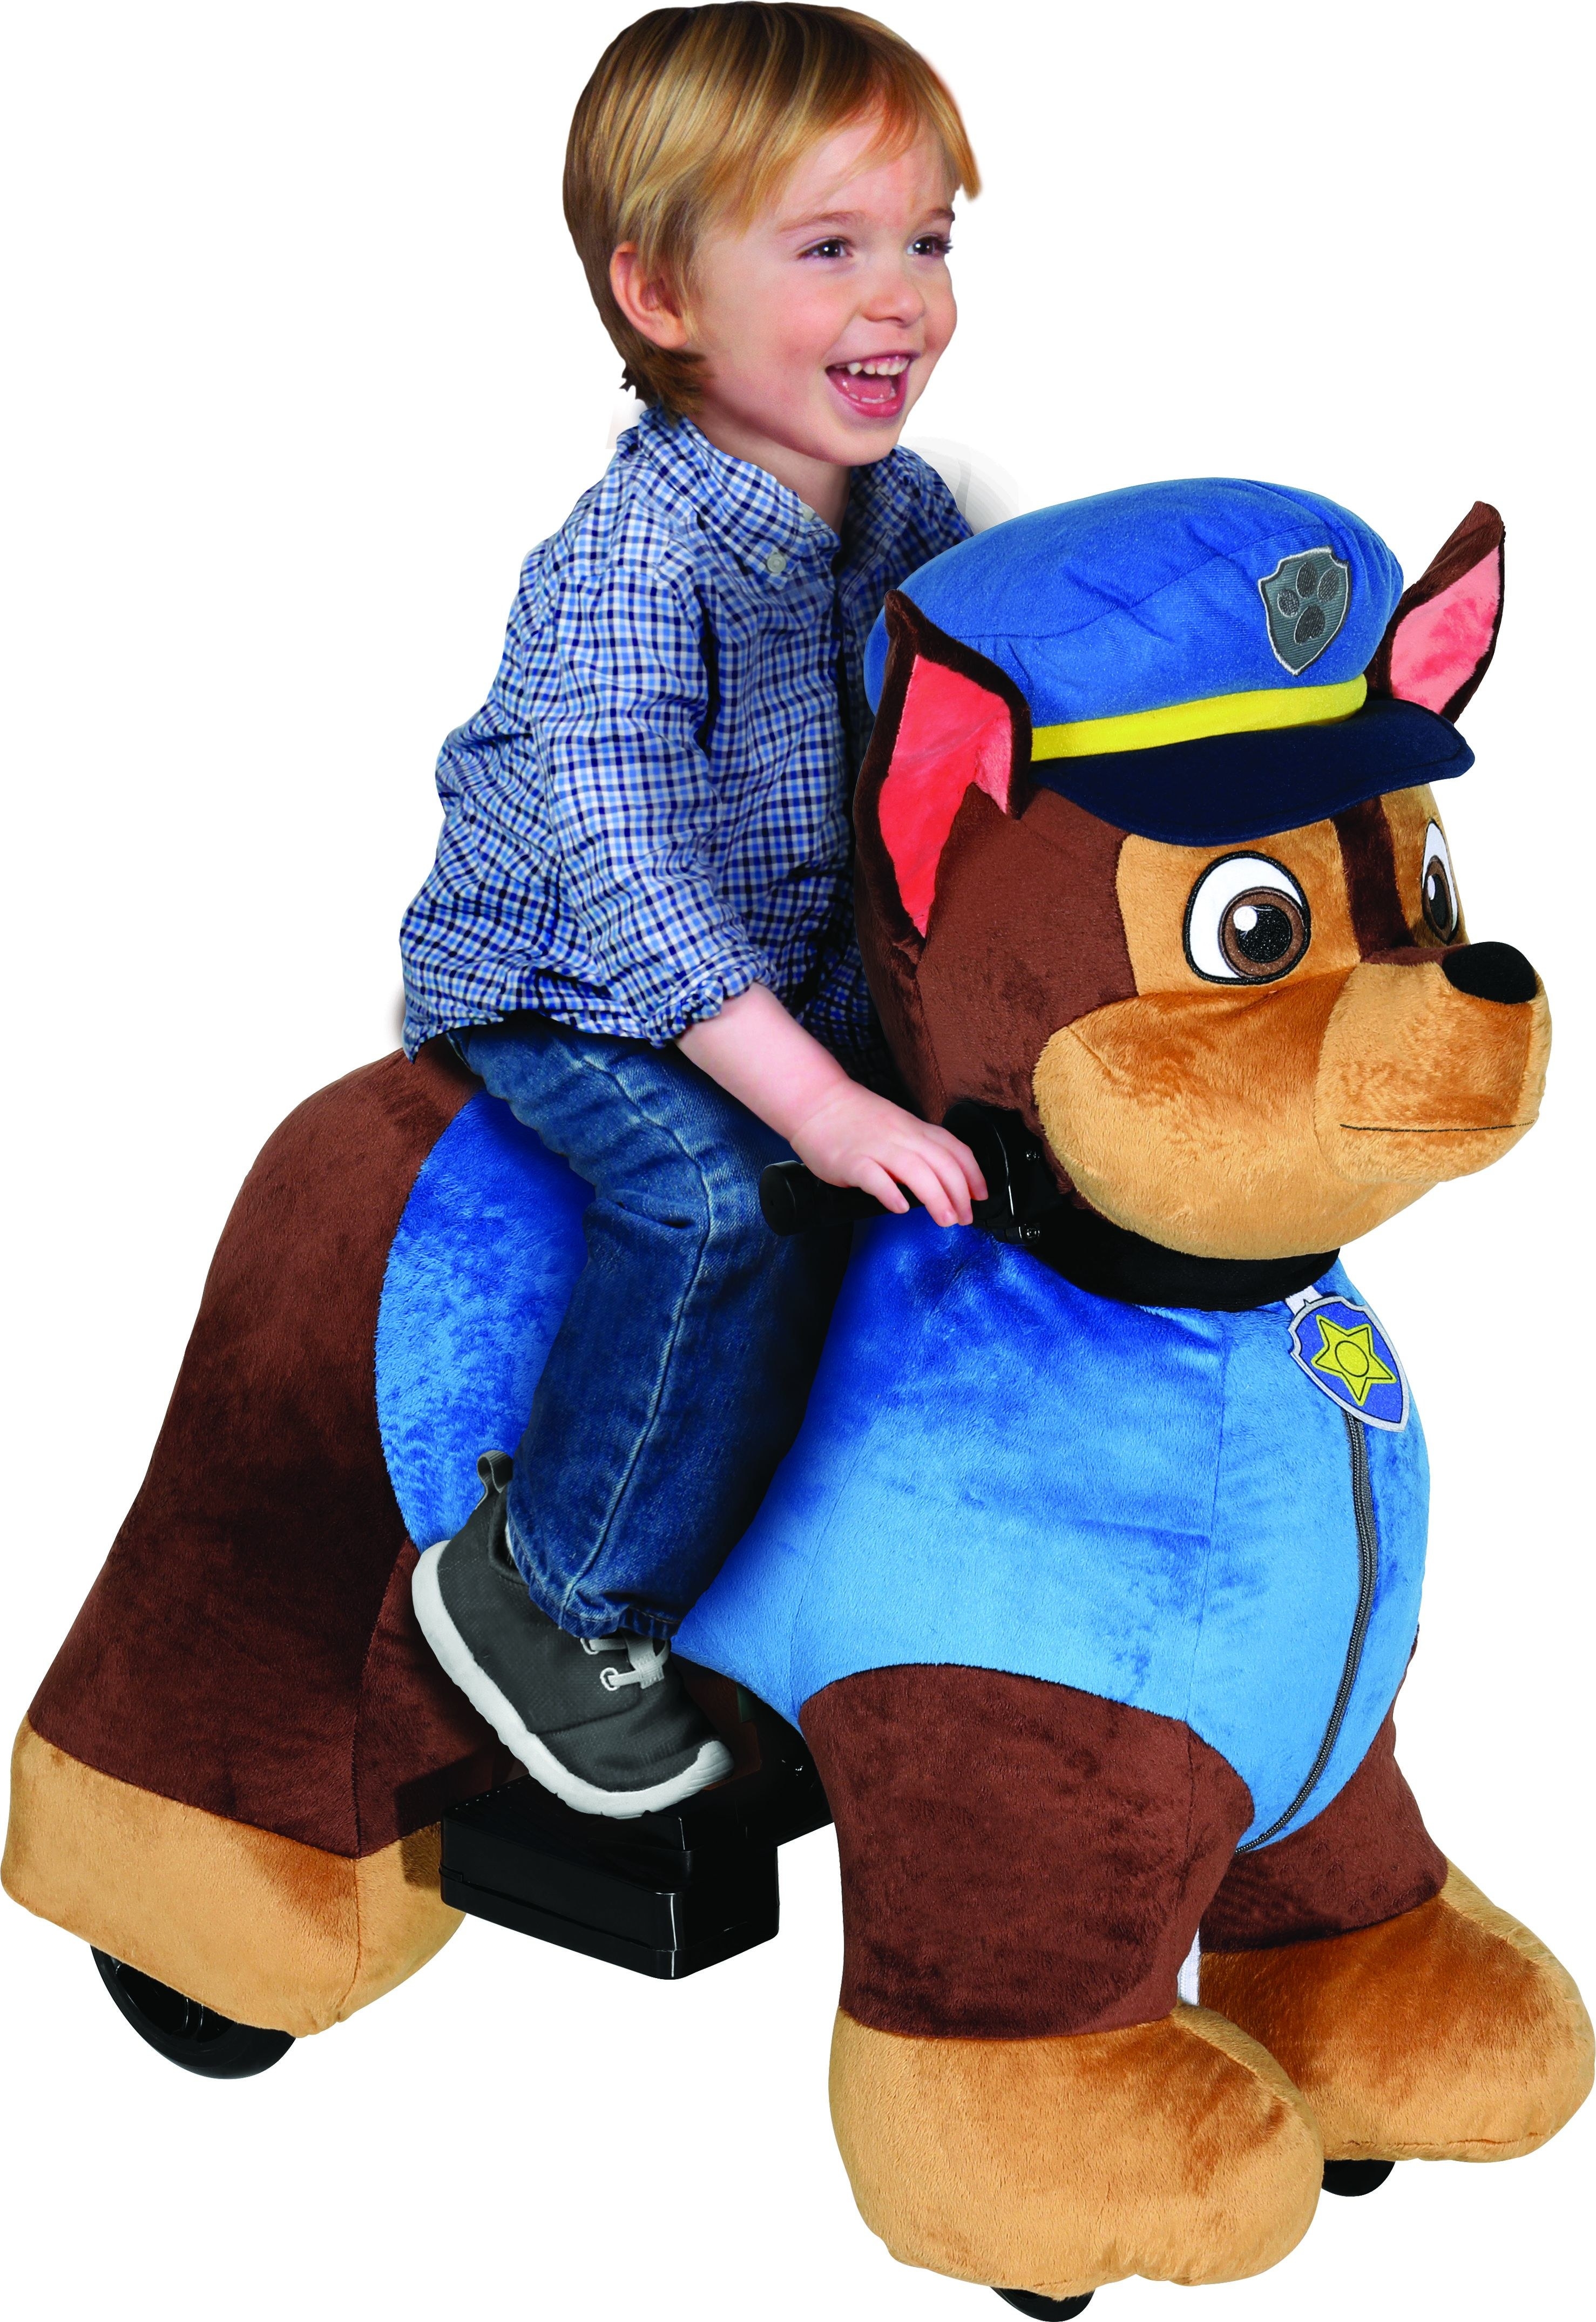 child riding a paw patrol toy